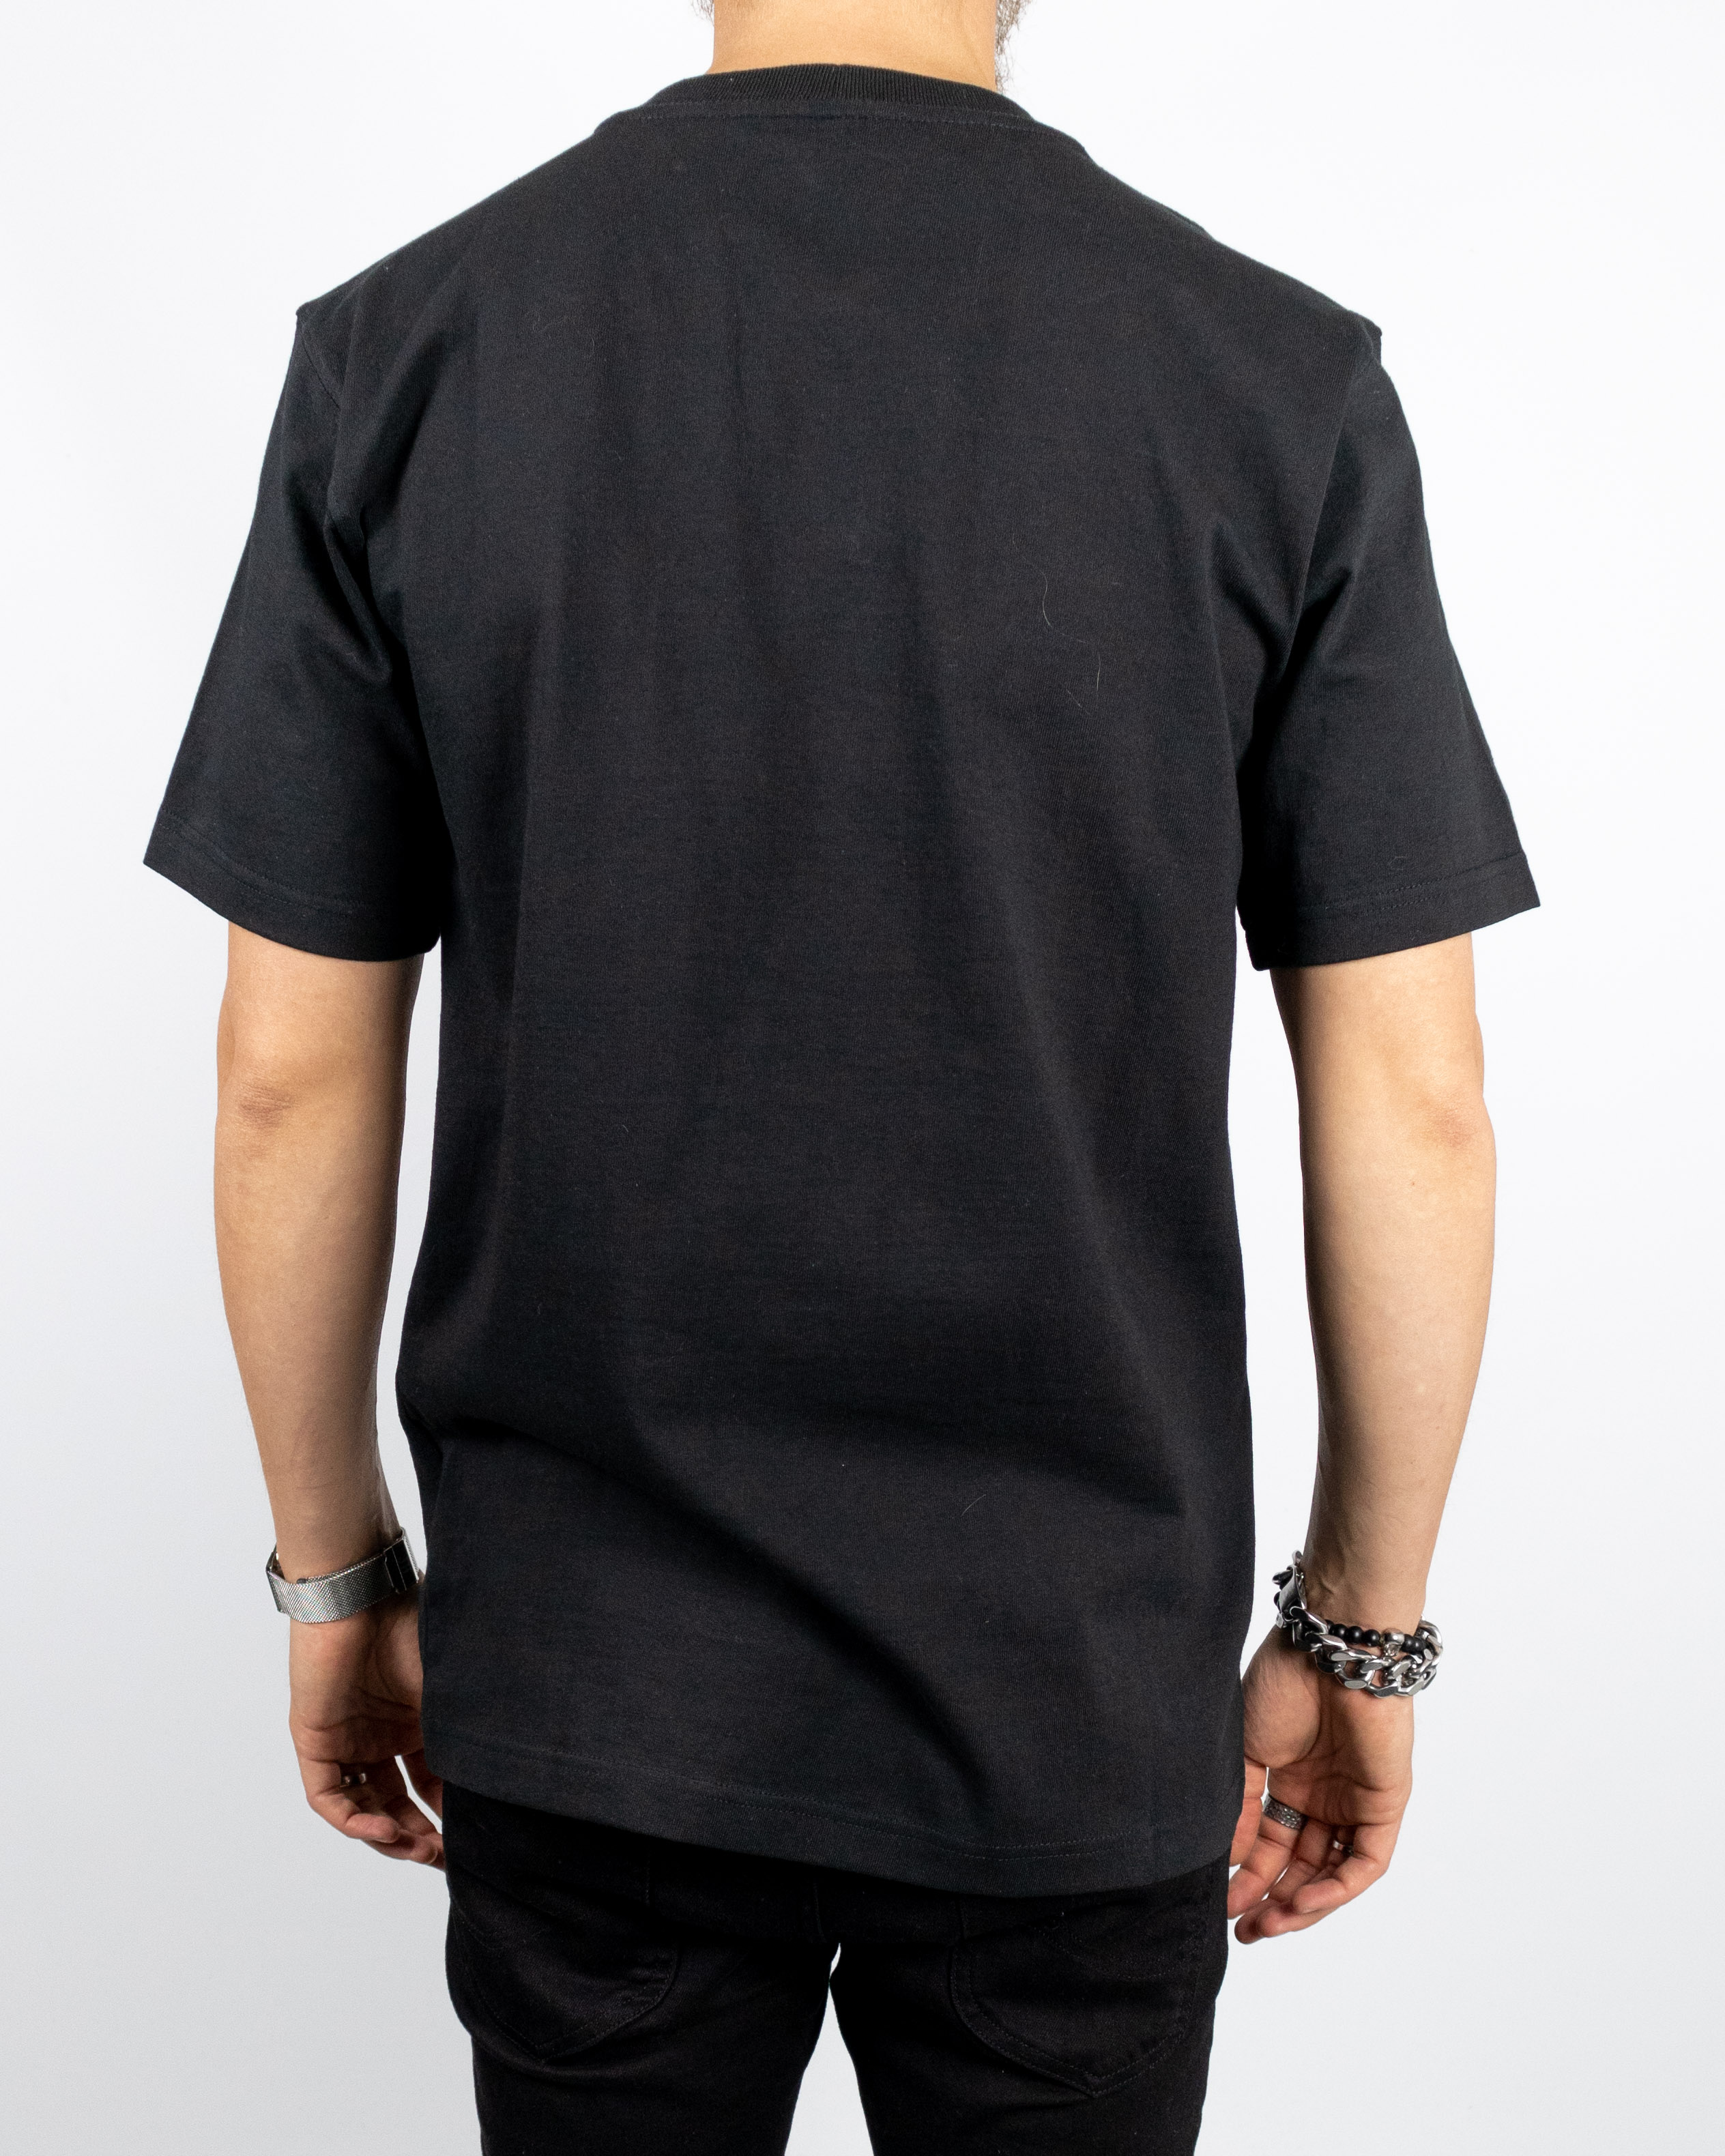 Vintage Johan Carhartt Pocket T-shirt - Black on Garmentory